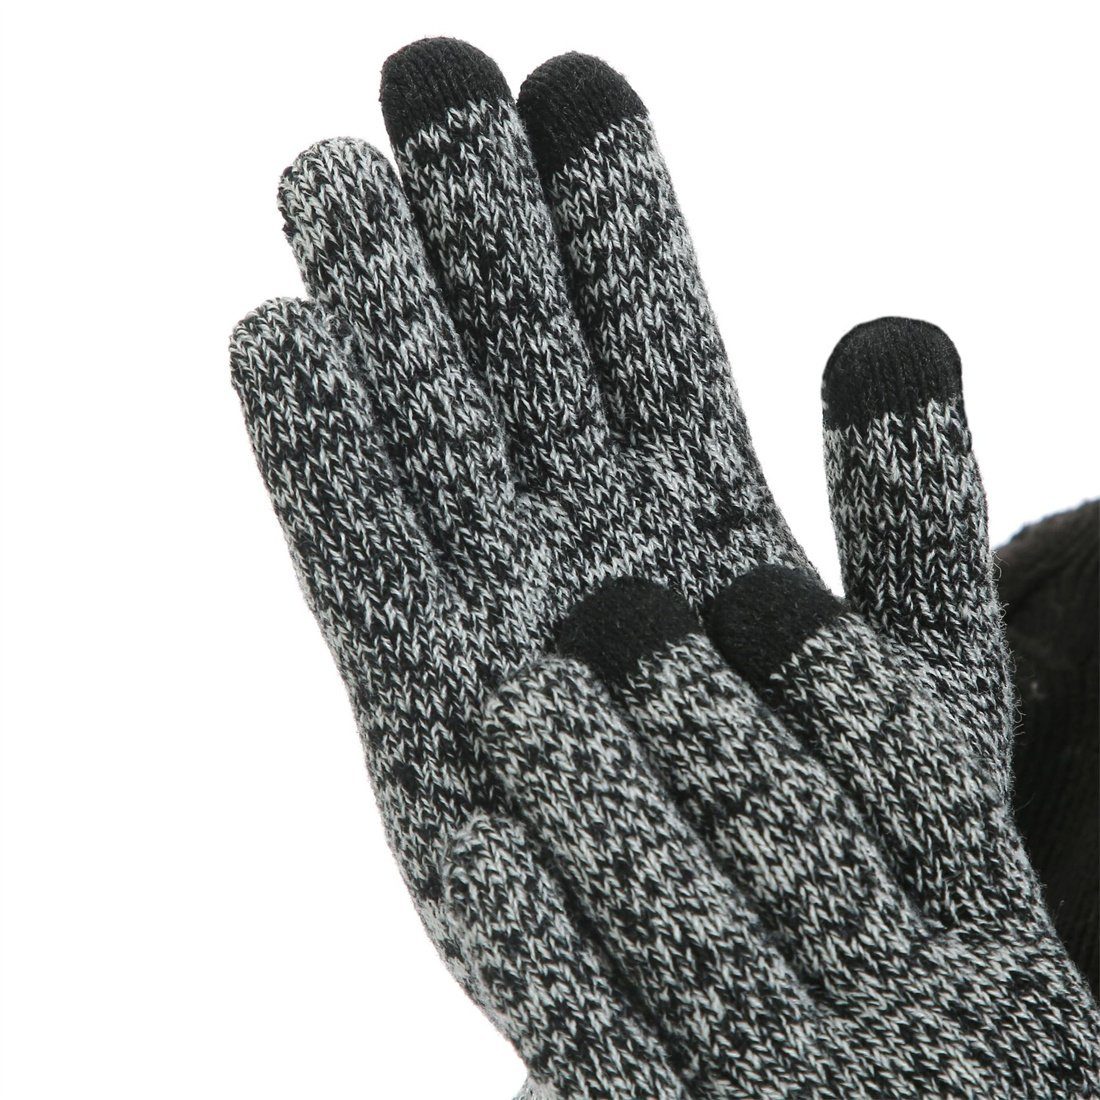 DÖRÖY Strickmütze Wintermütze aus Grau verdickter Mützenschal Wolle,Warmer Handschuhe Set 3er